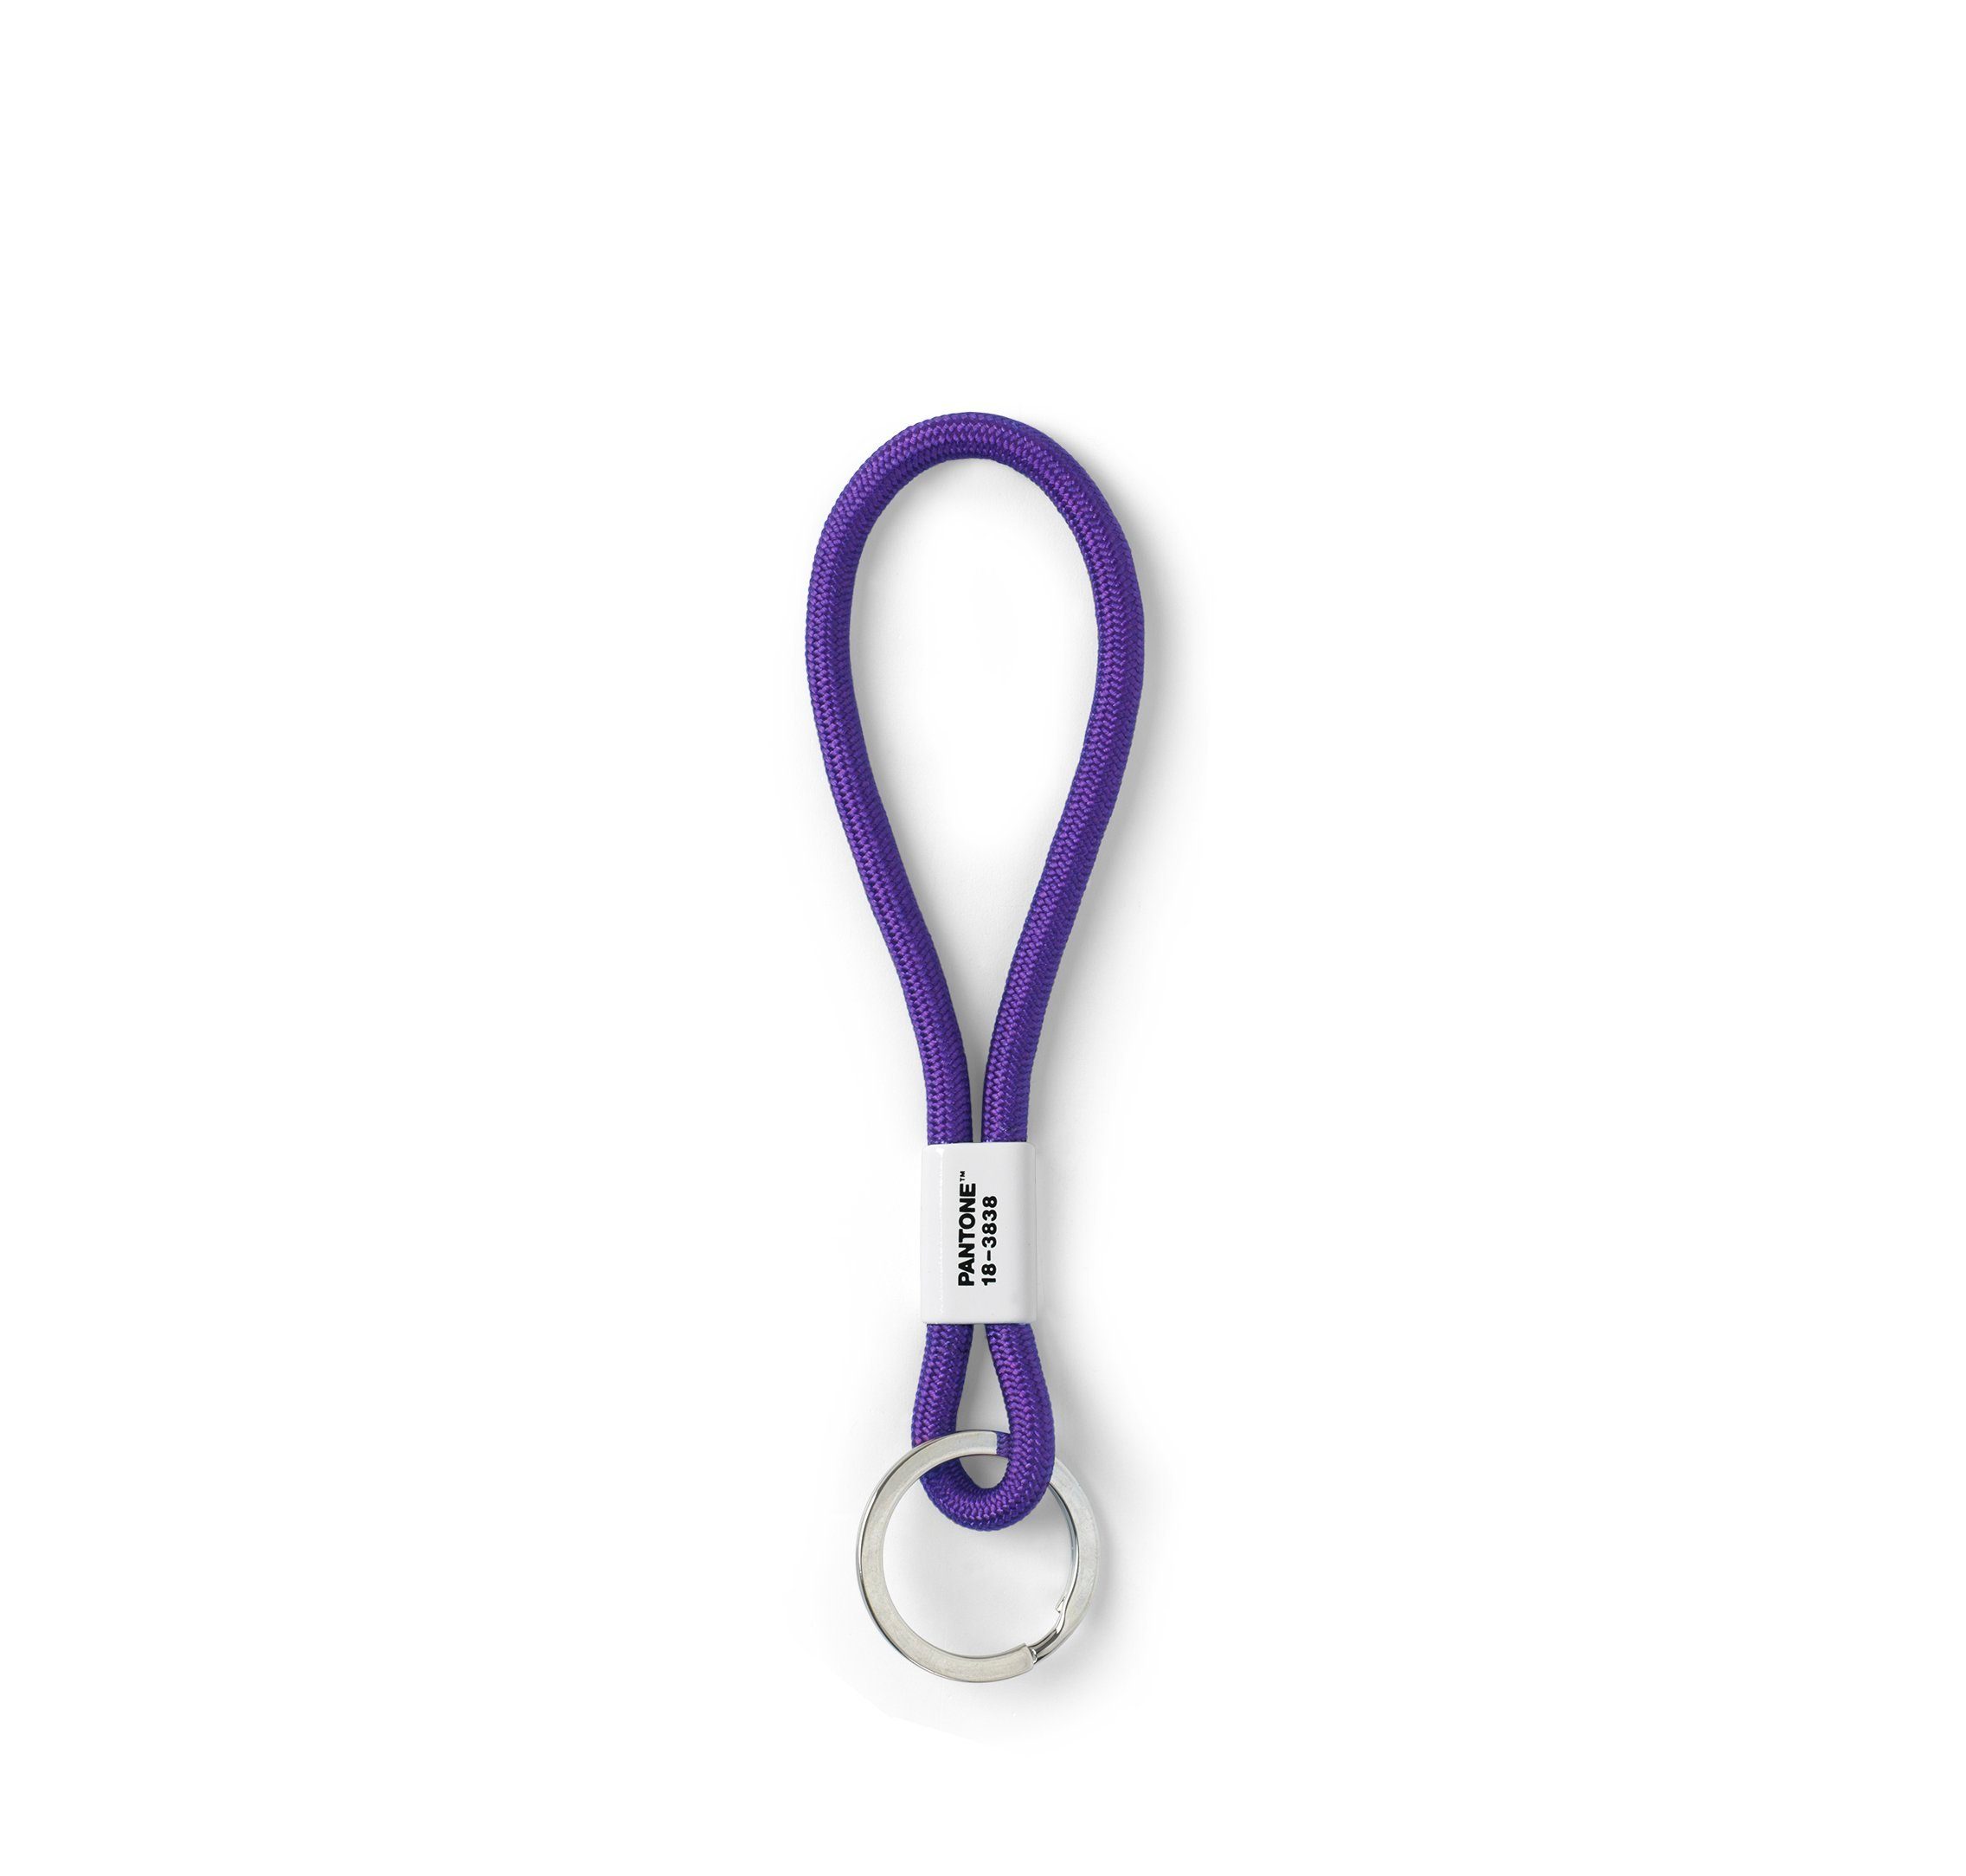 PANTONE Schlüsselanhänger, Design- Schlüsselband, Key Chain, kurz Ultra Violet 18-3838 | Schlüsselanhänger